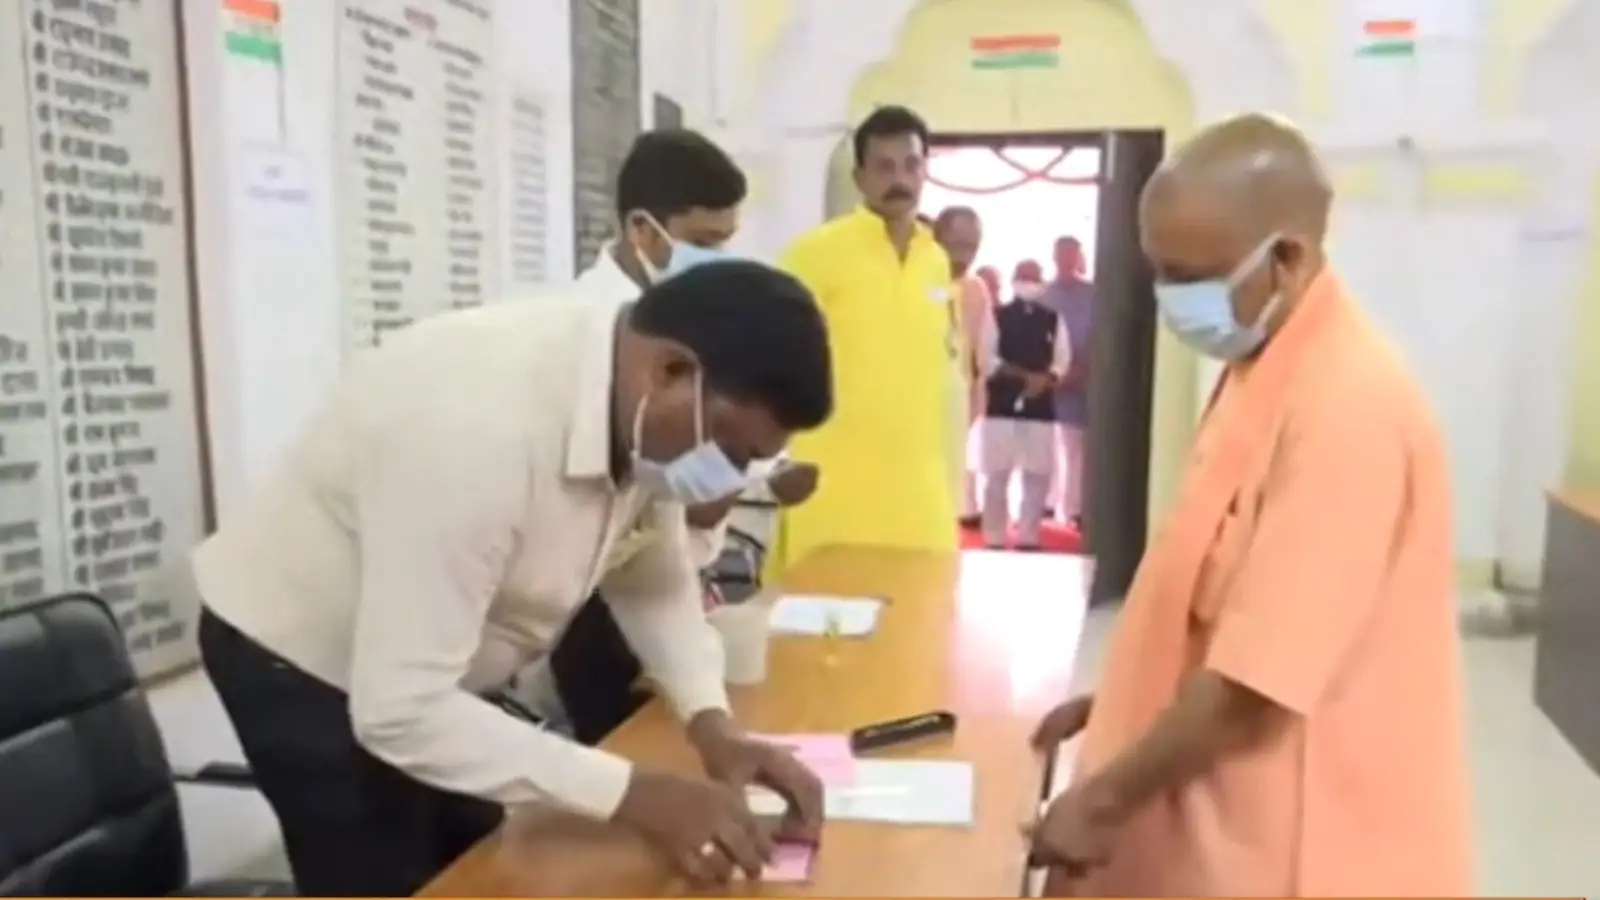 Morning brief: UP CM Yogi Adityanath casts vote in legislative council polls, and all the latest news